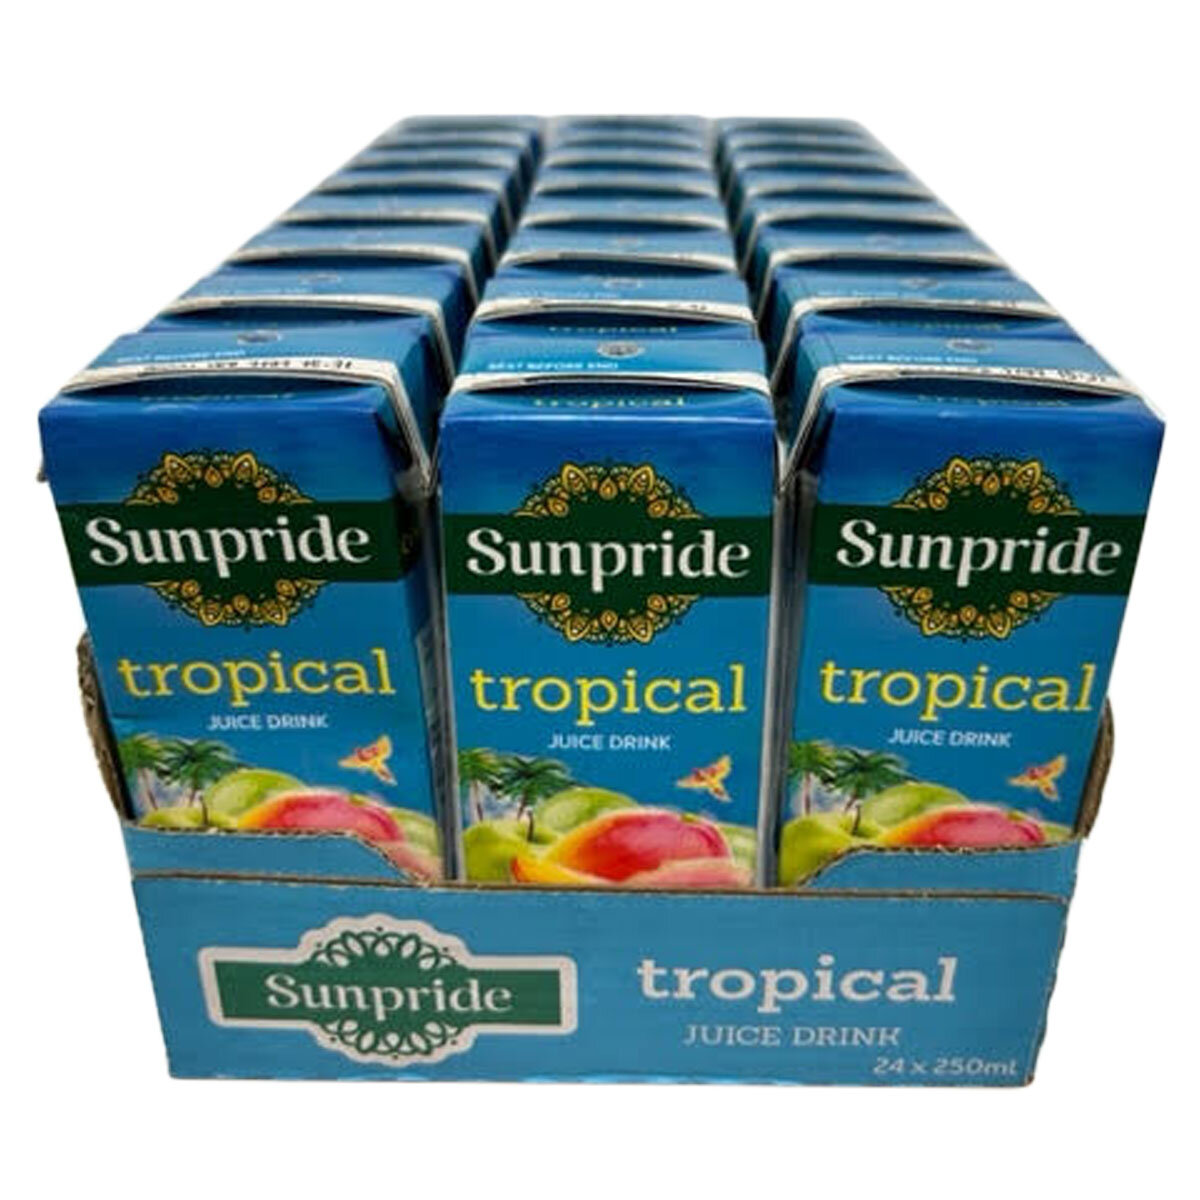 Sunpride Tropical Juice Drink, 24 x 250ml